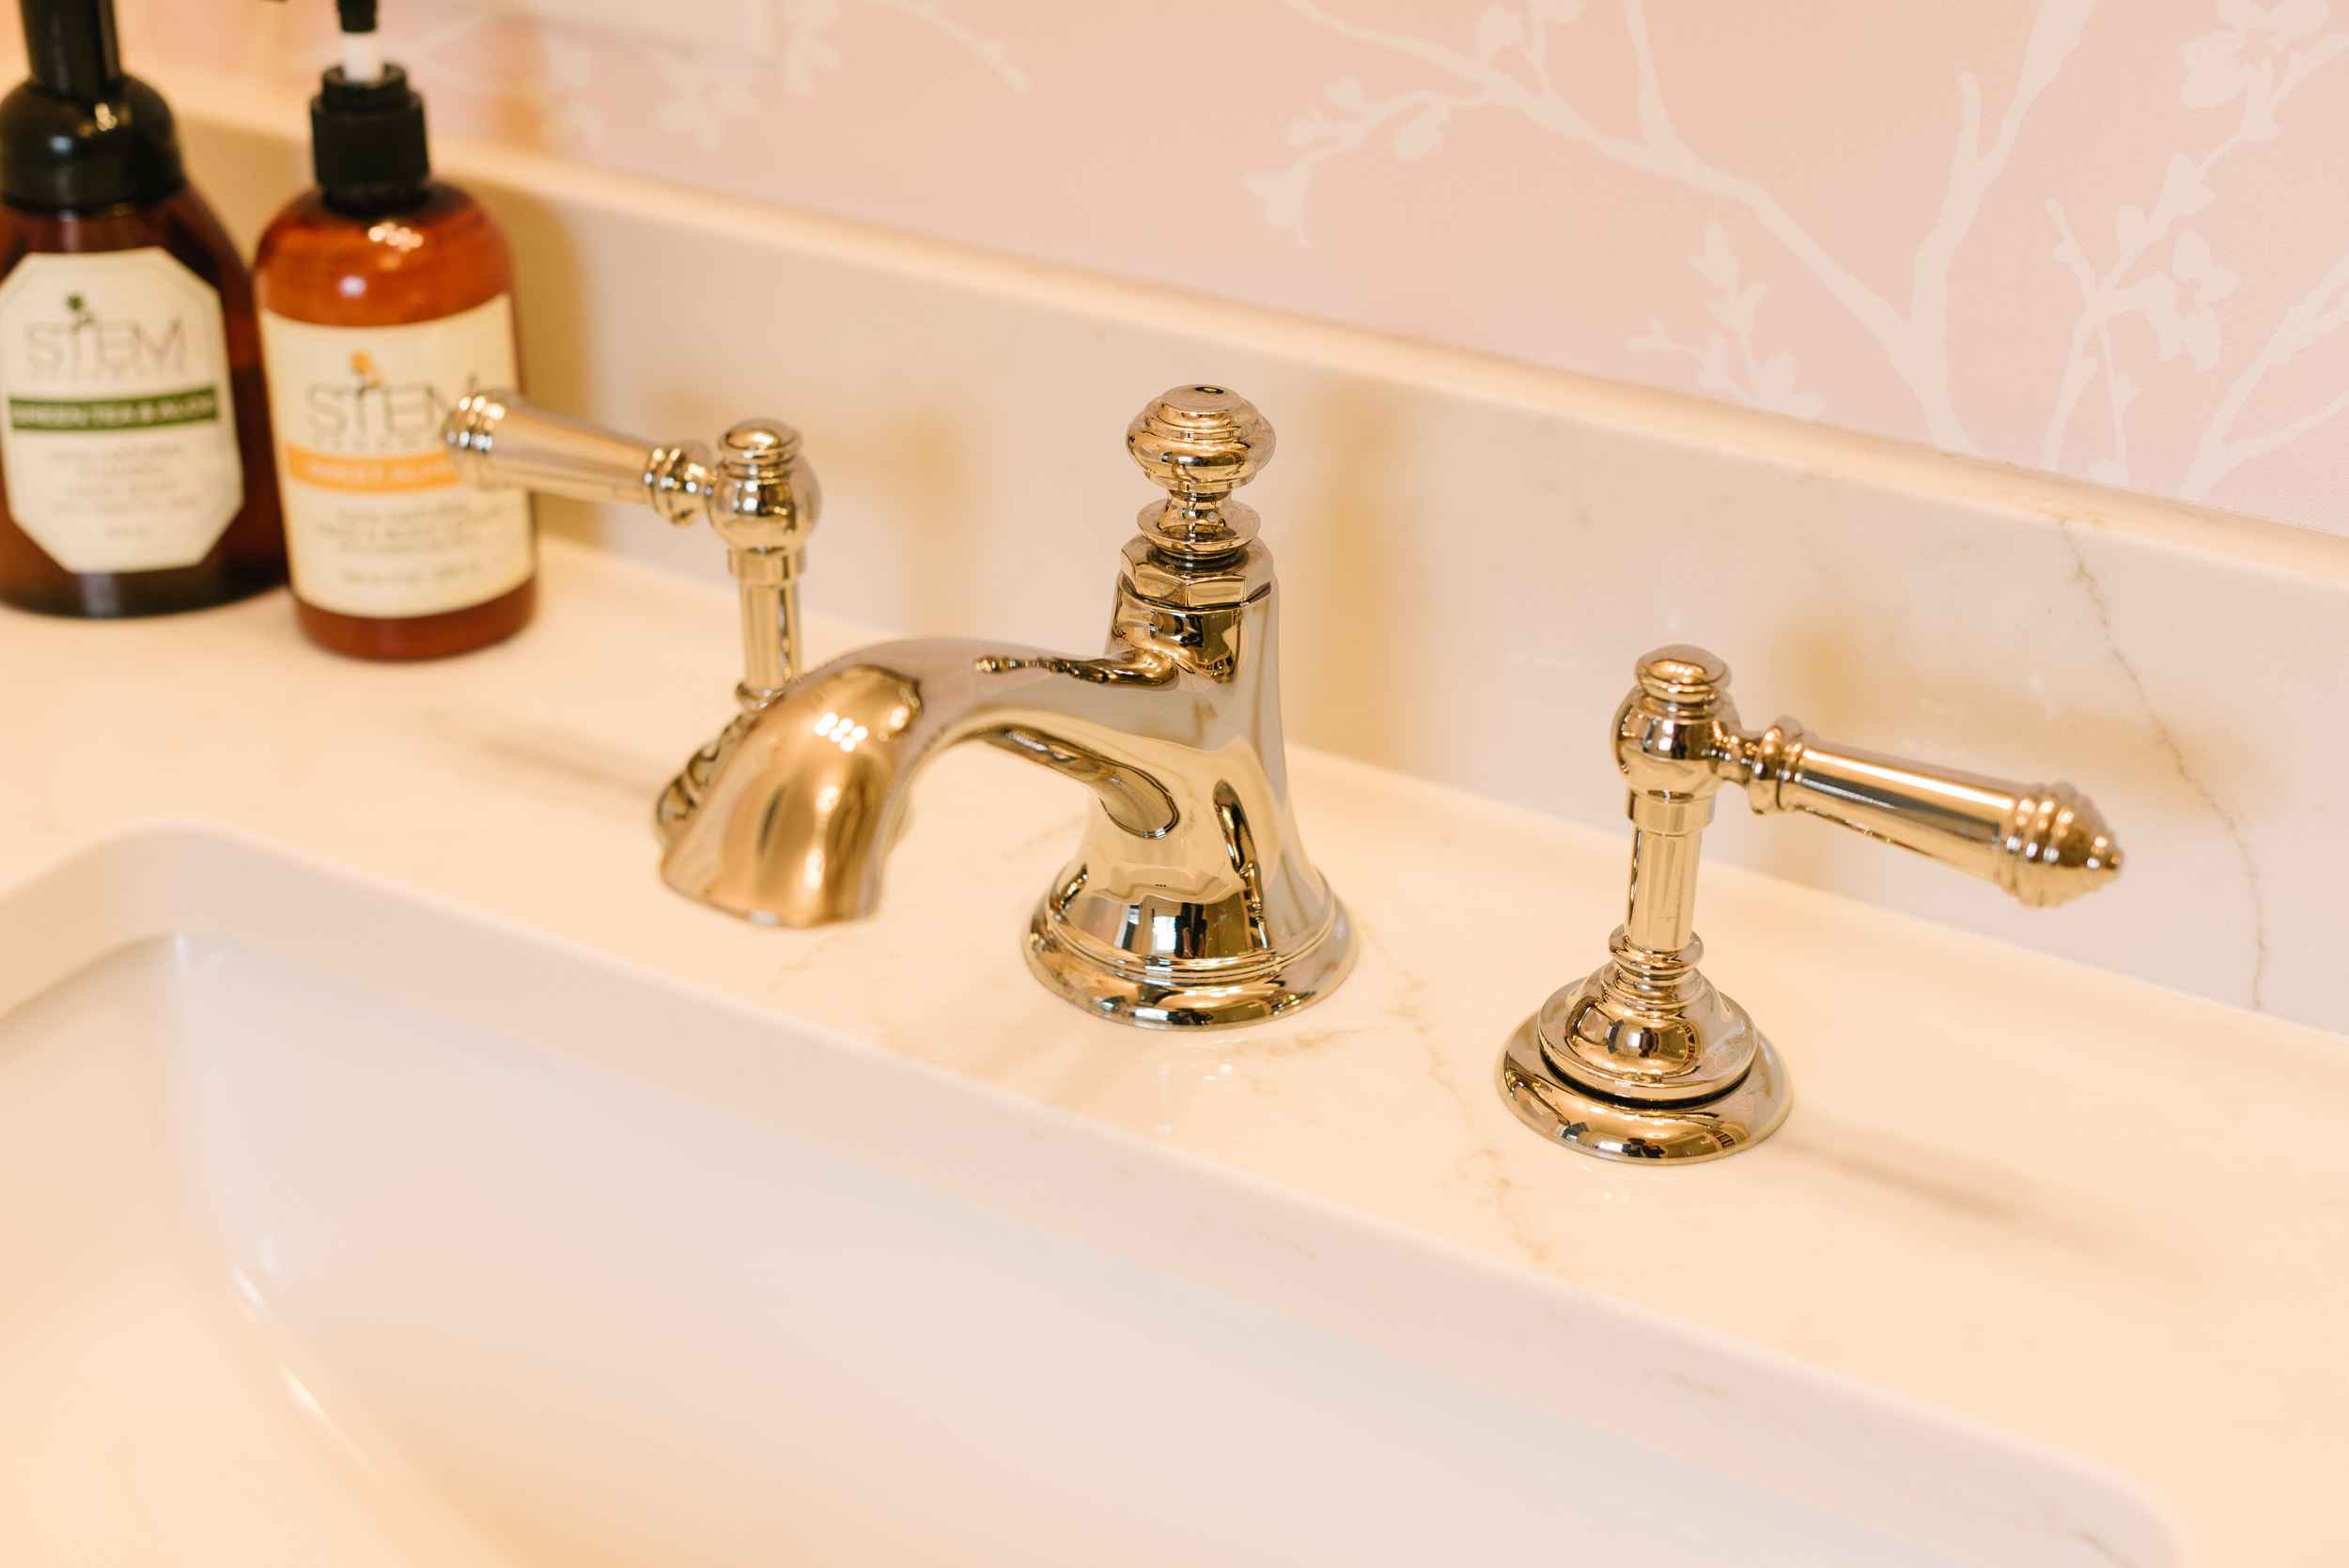 Sink faucet remodeled bathroom in cleveland